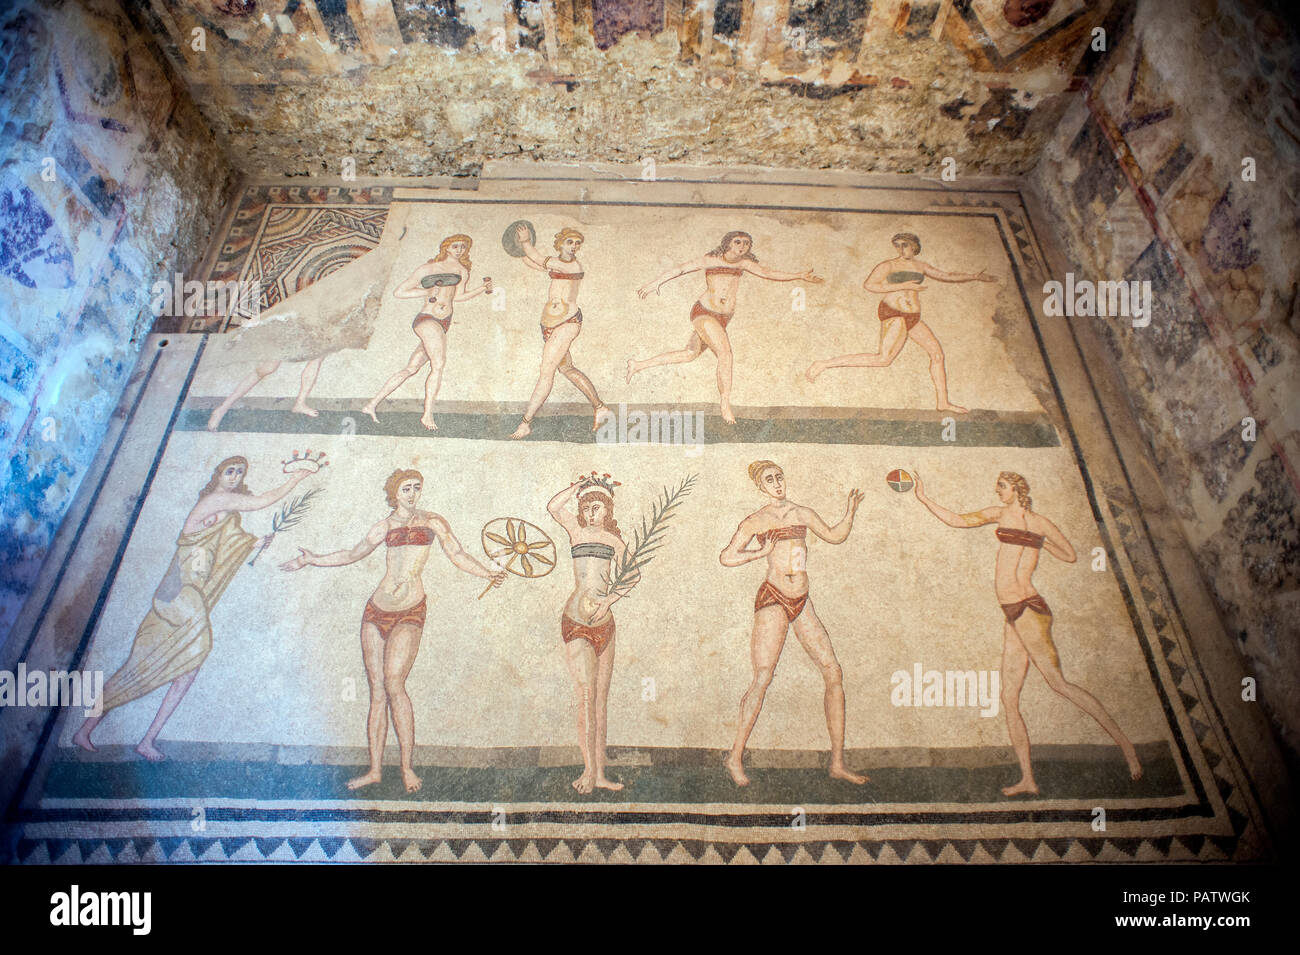 The Bikini Girls, otherwise known as Ten Athletic Woman, mozaic at 4th century Villa Romana del Casale, an ancient Roman villa, Sicily. Stock Photo